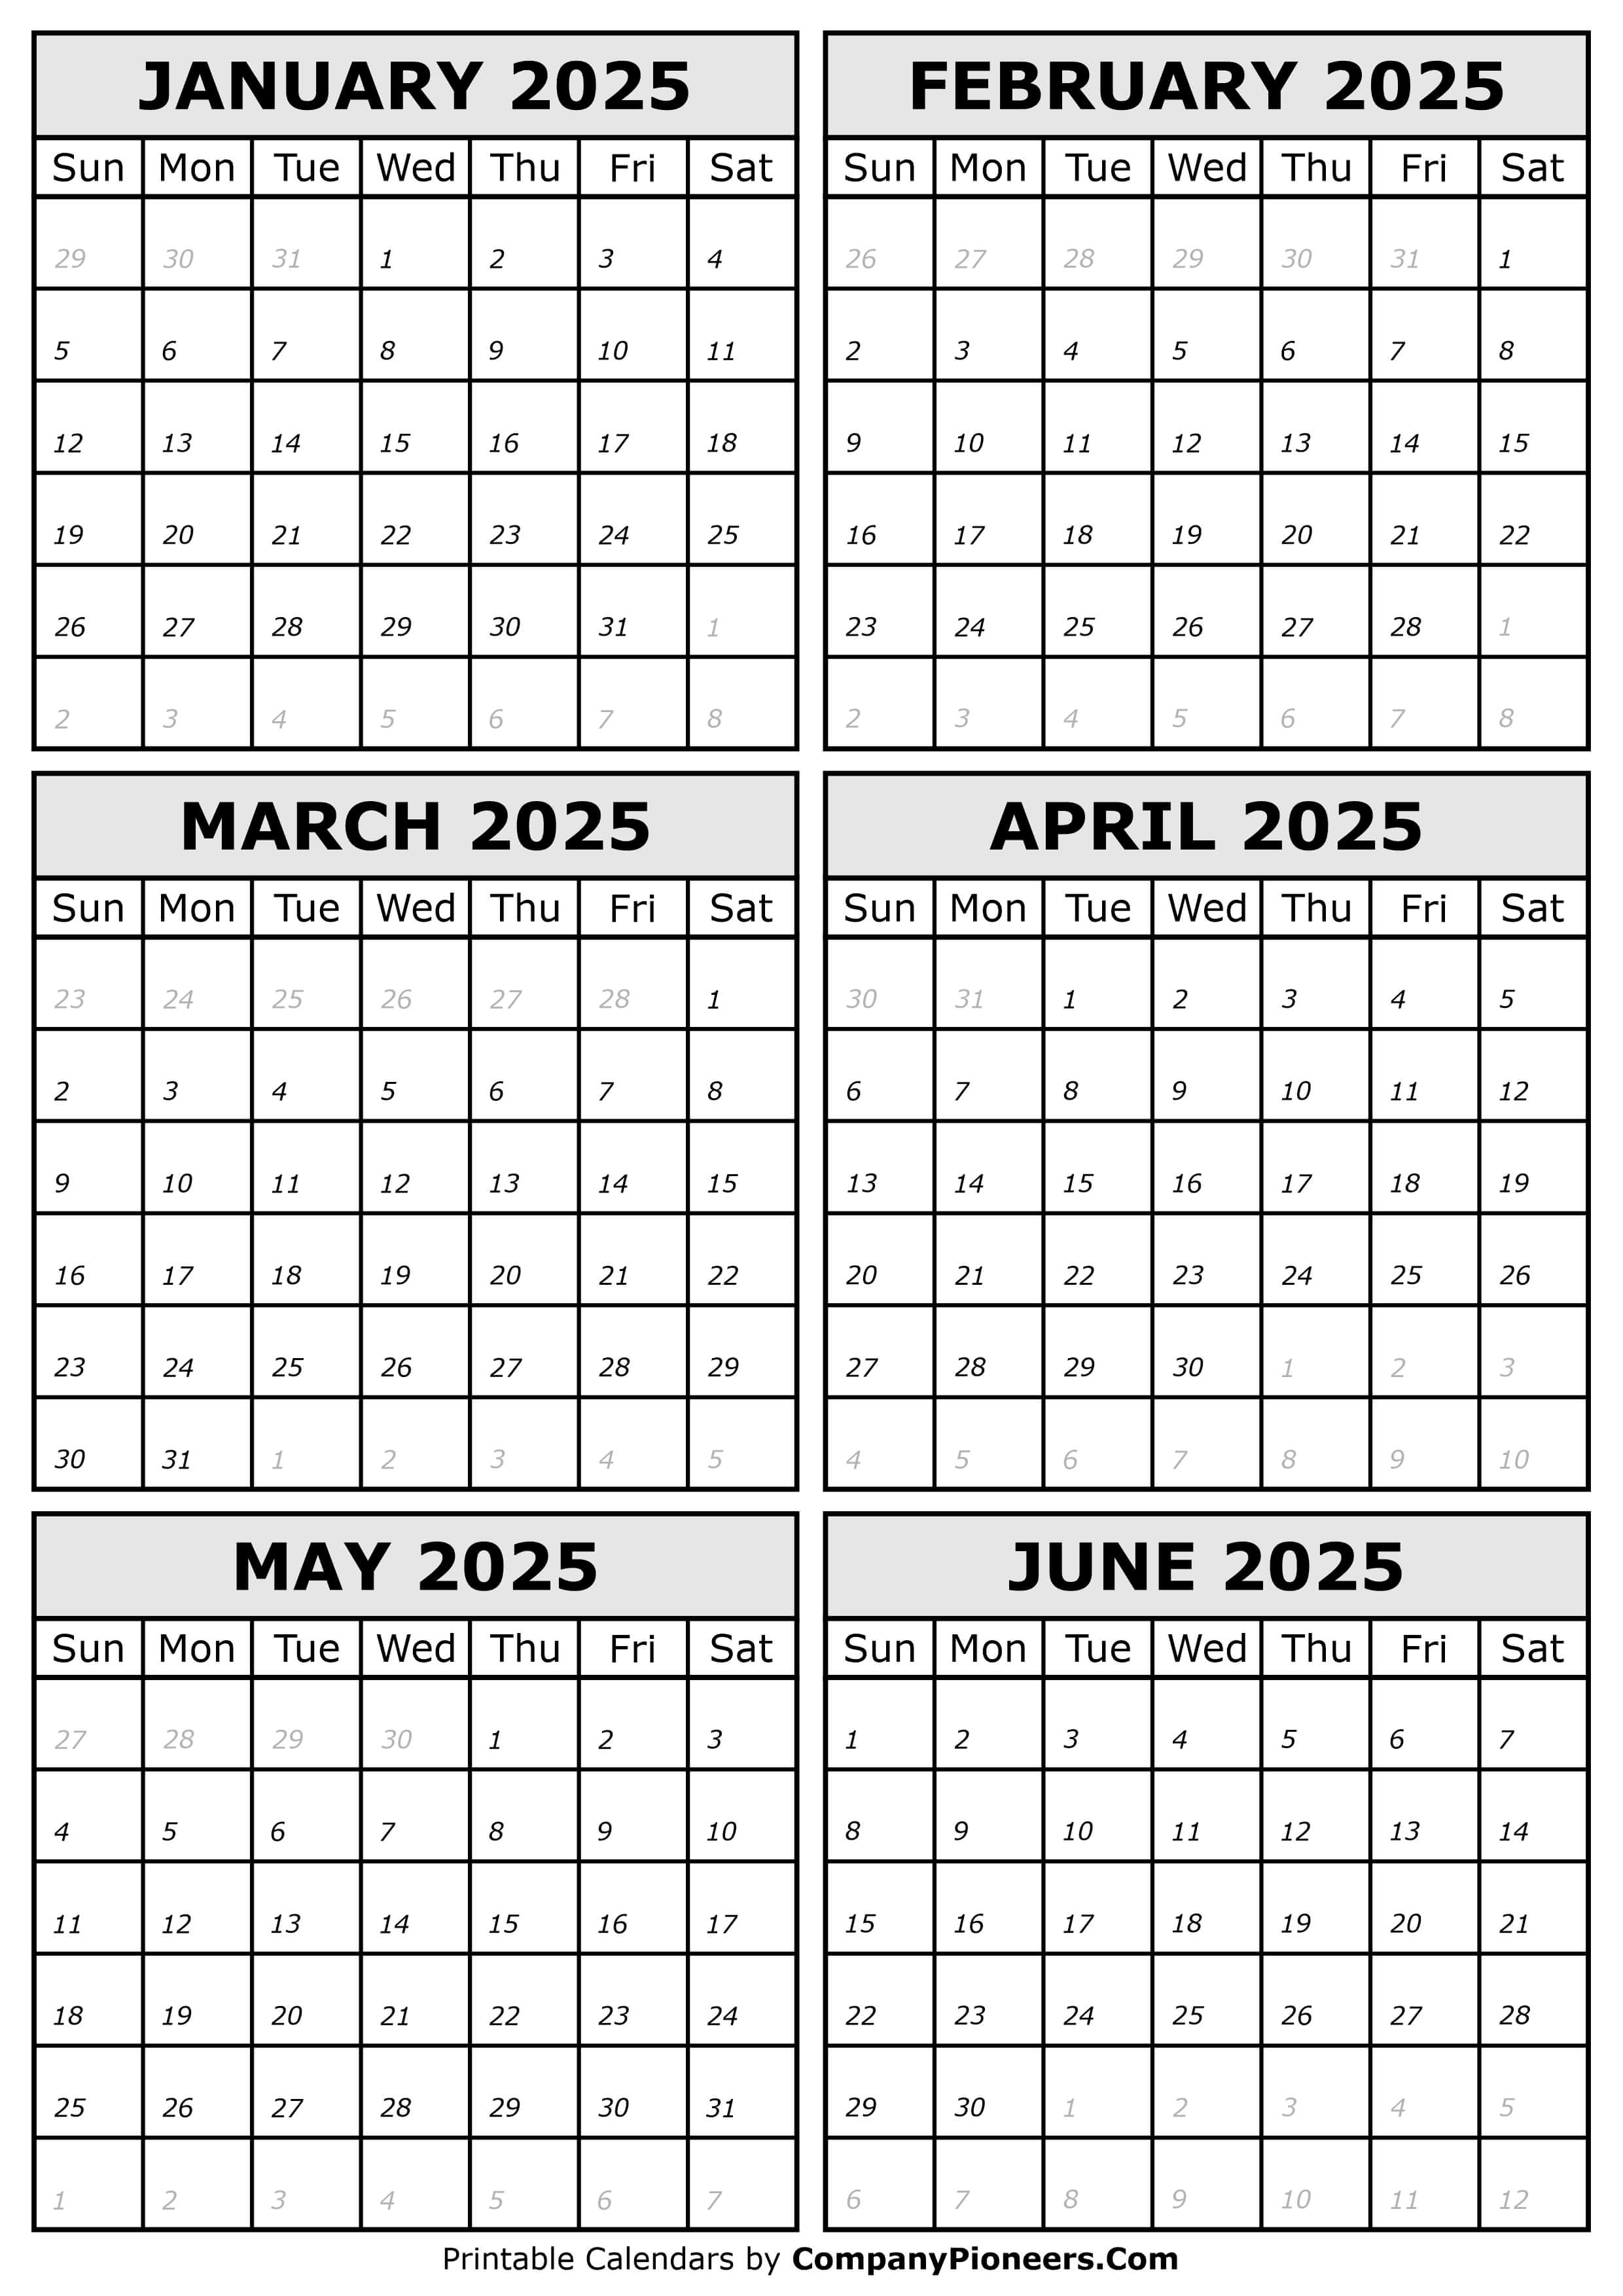 2025 January to June Calendar